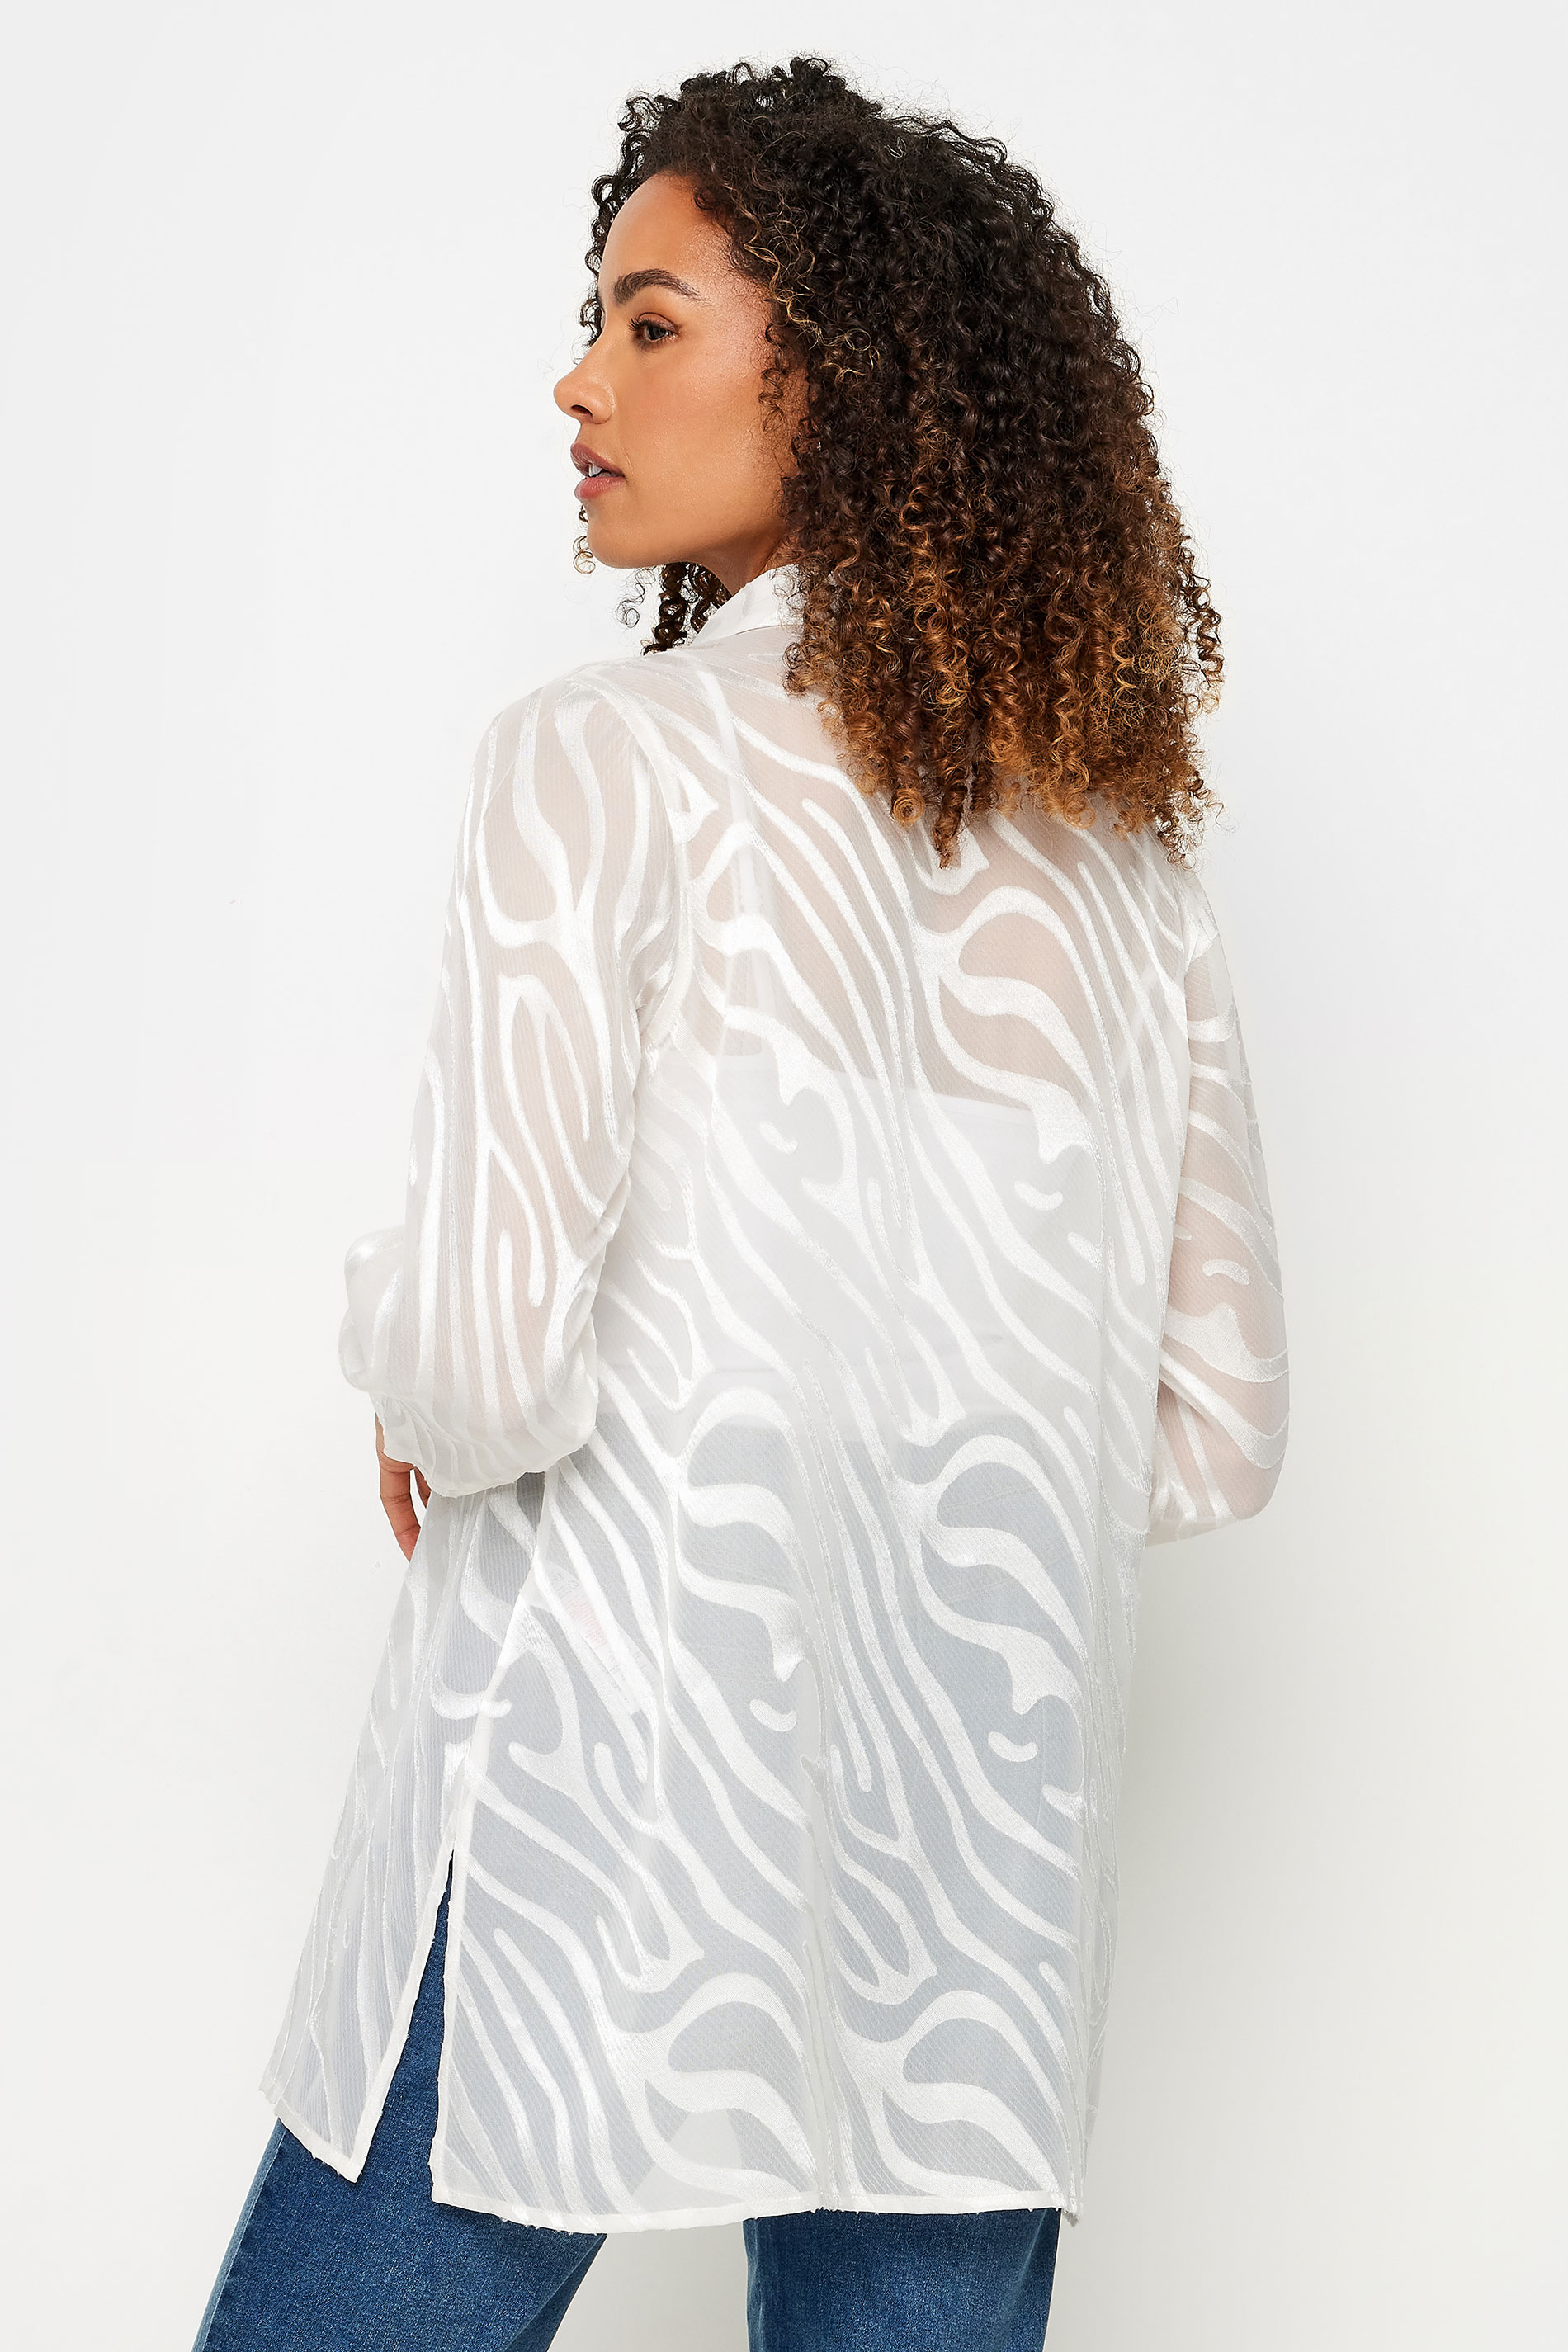 M&Co White Zebra Print Long Sleeve Mesh Shirt | M&Co 3